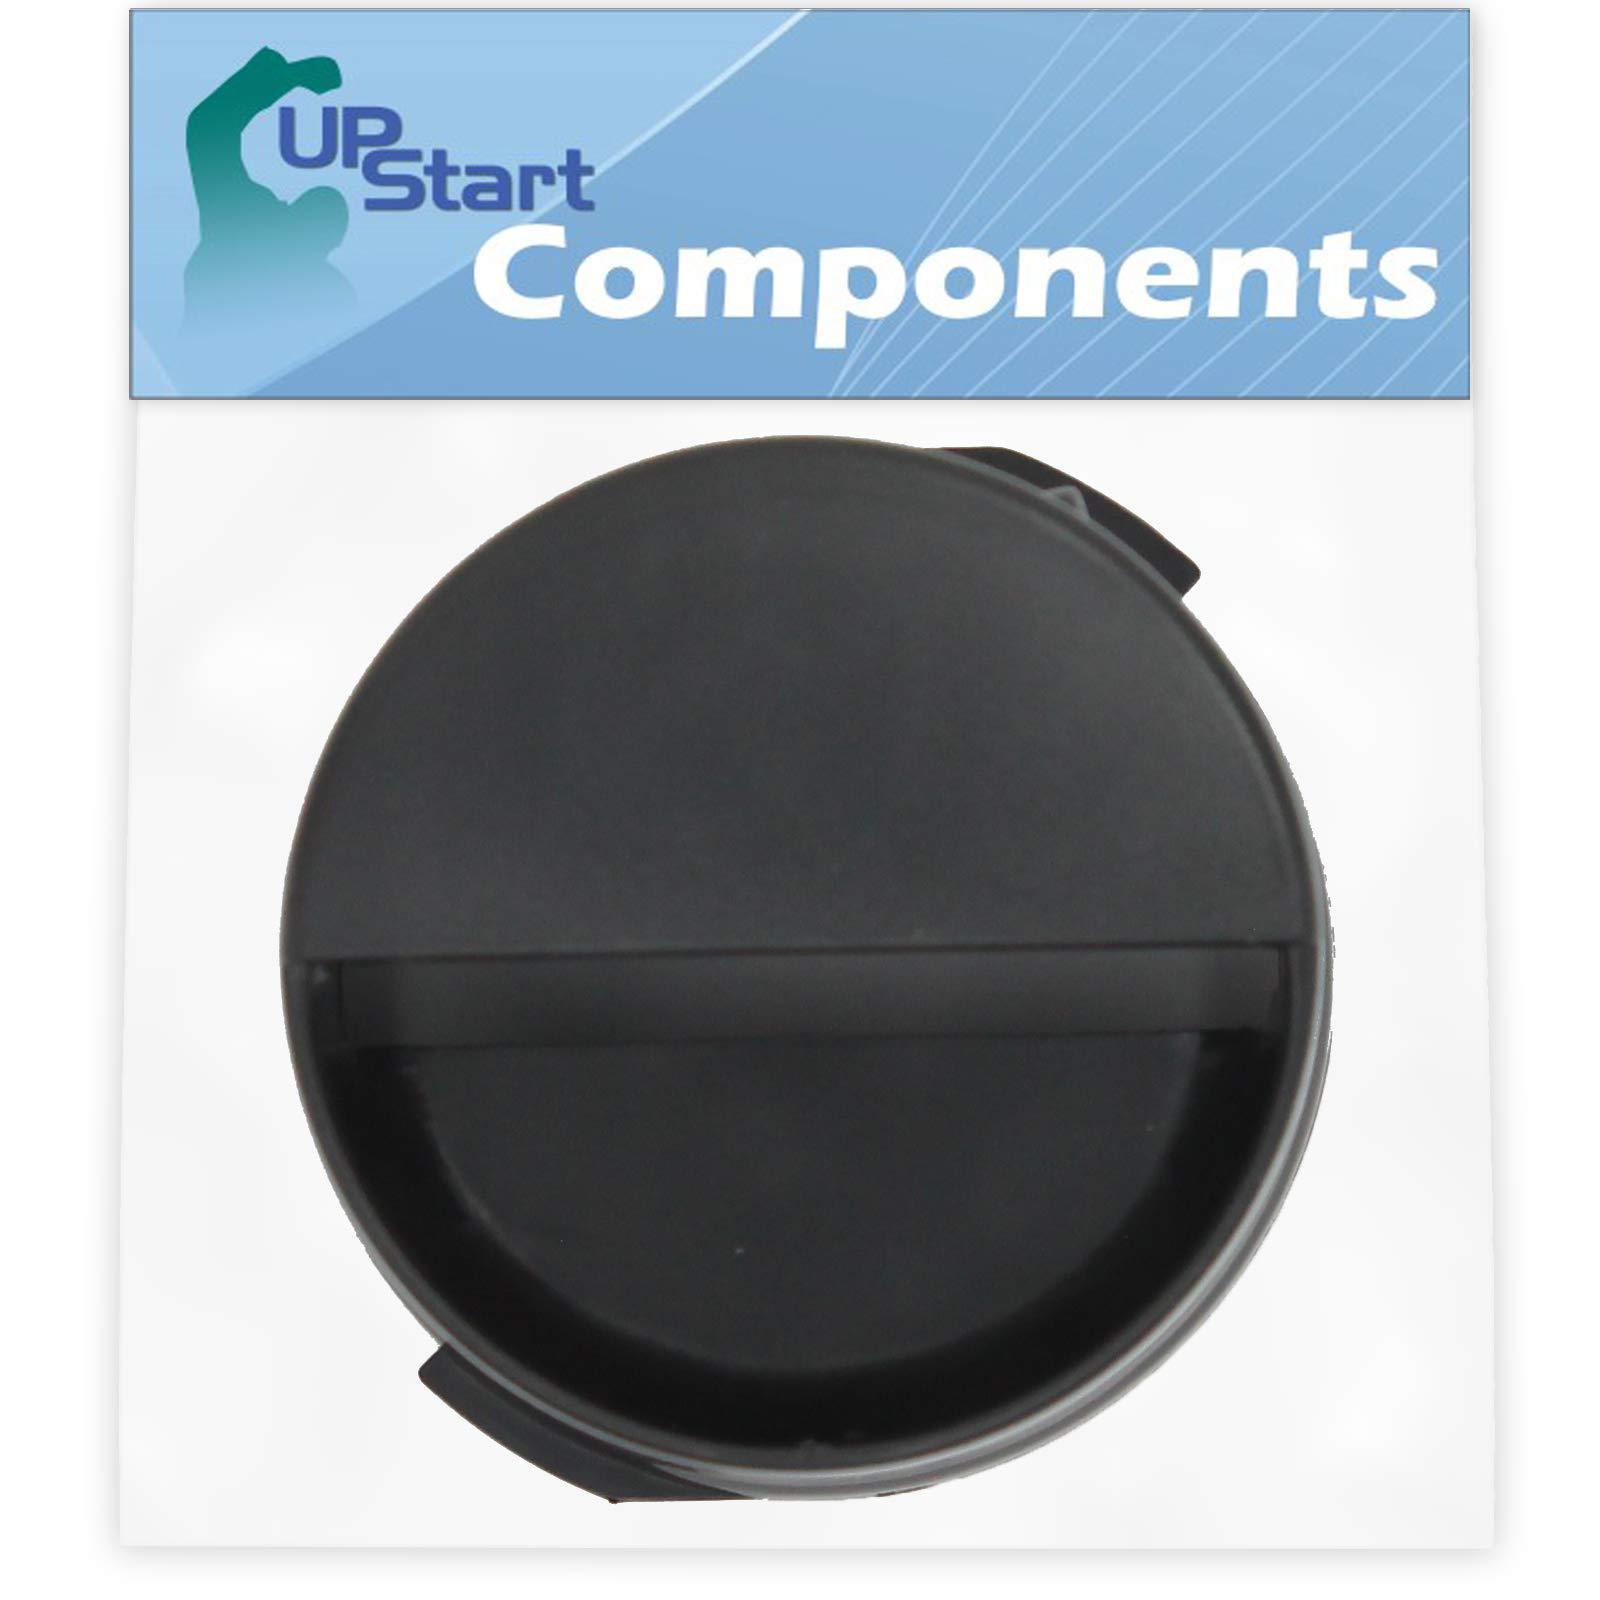 UpStart Components 2260502b refrigerator water filter cap for maytag, kitchenaid & whirlpool refrigerators. compatible 2260502b refrigerator wat